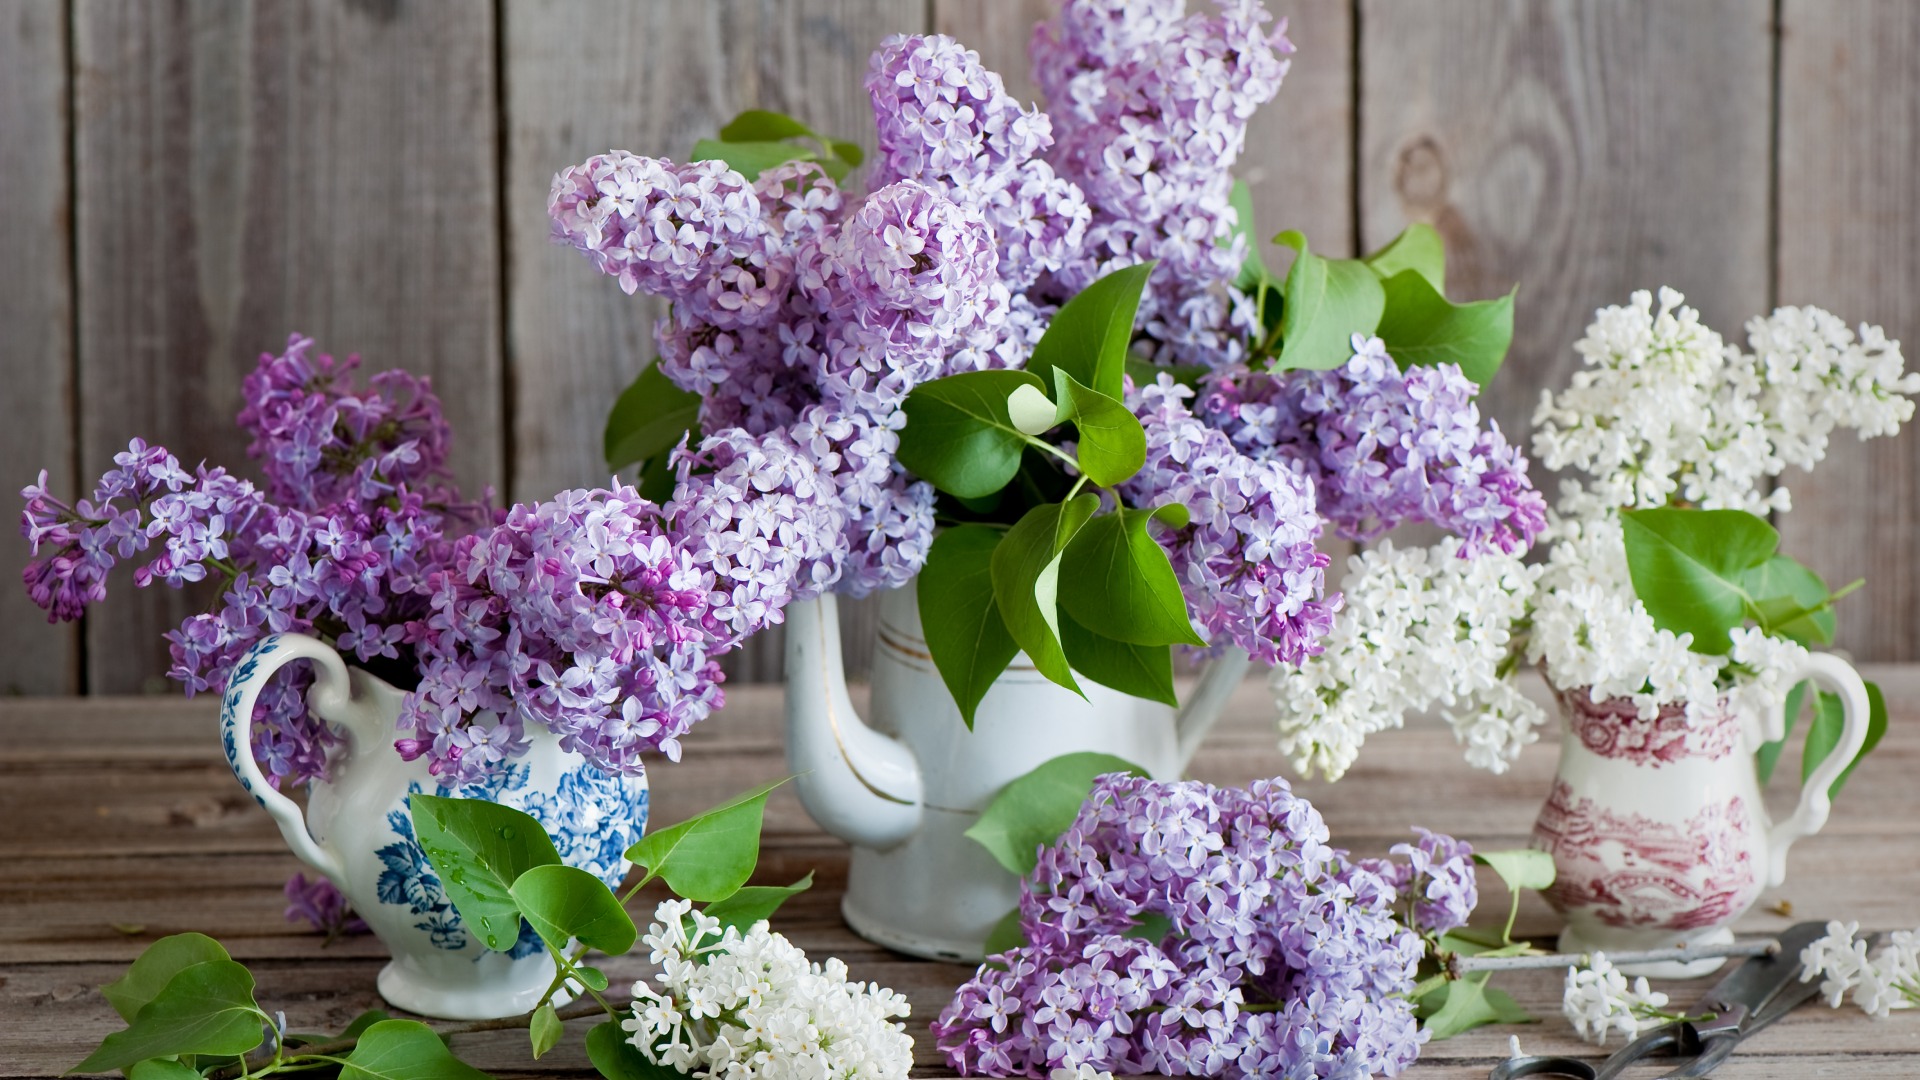 Download wallpaper Lilac bouquet